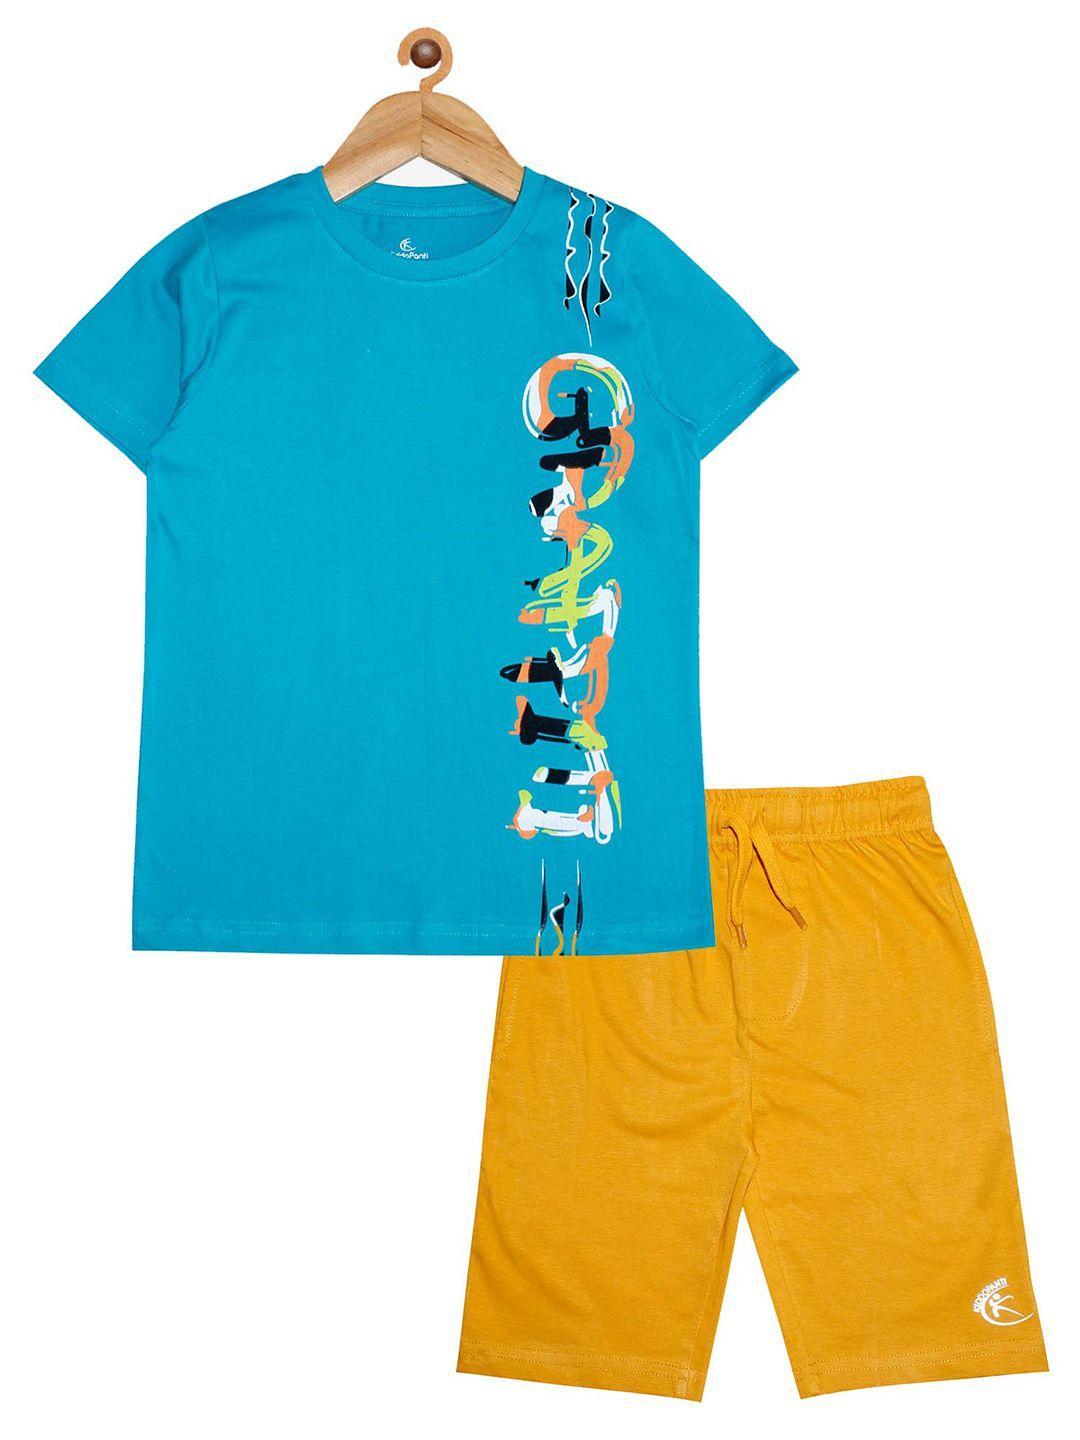 kiddopanti-boys-teal-&-mustard-printed-pure-cotton-t-shirt-with-shorts